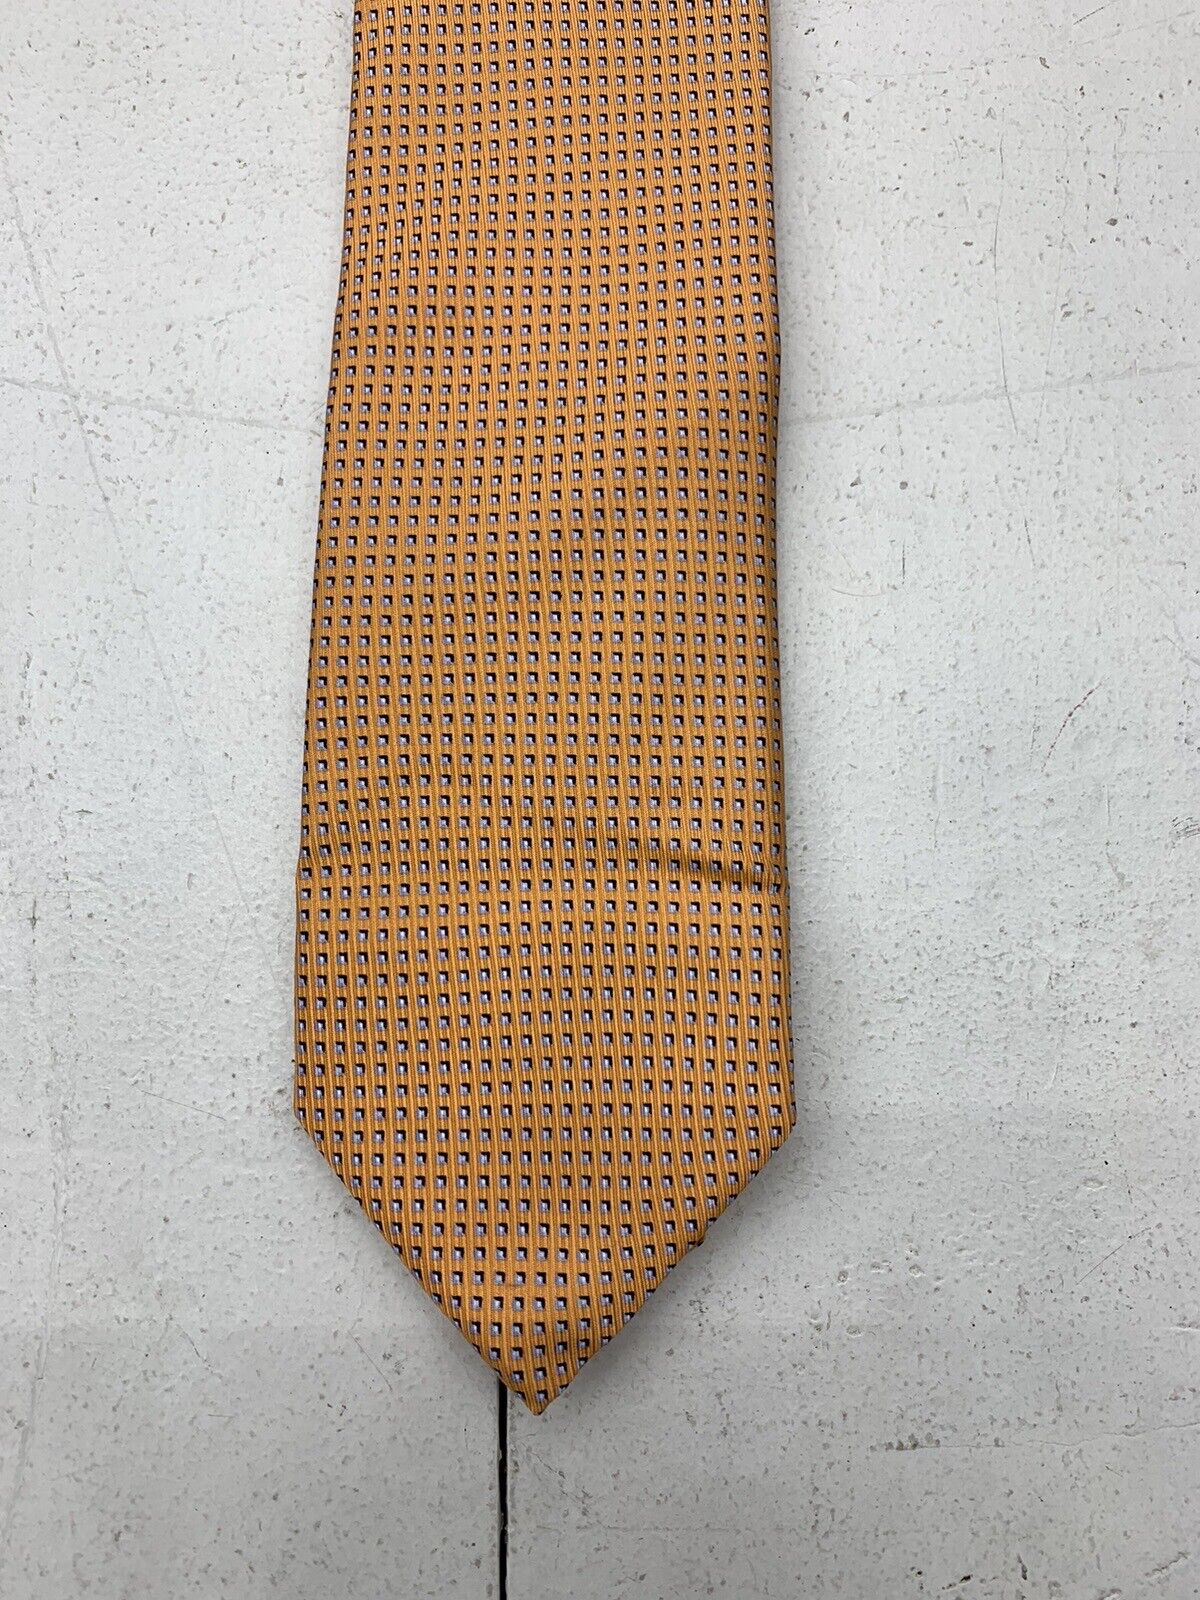 JZ Richards Orange Blue Square Print Neck Tie